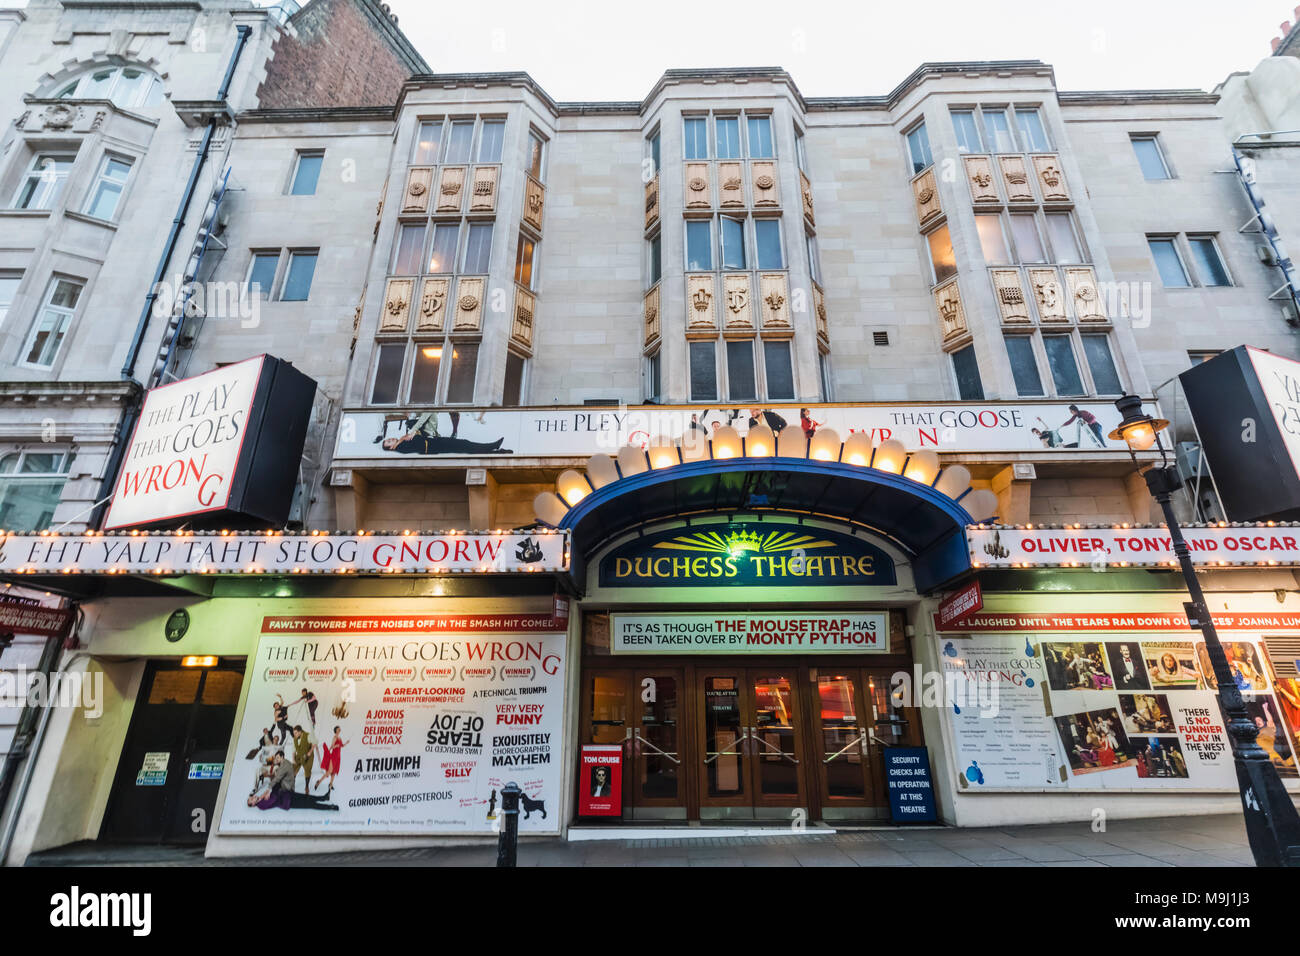 England, London, Westend, Duchess Theatre Stock Photo